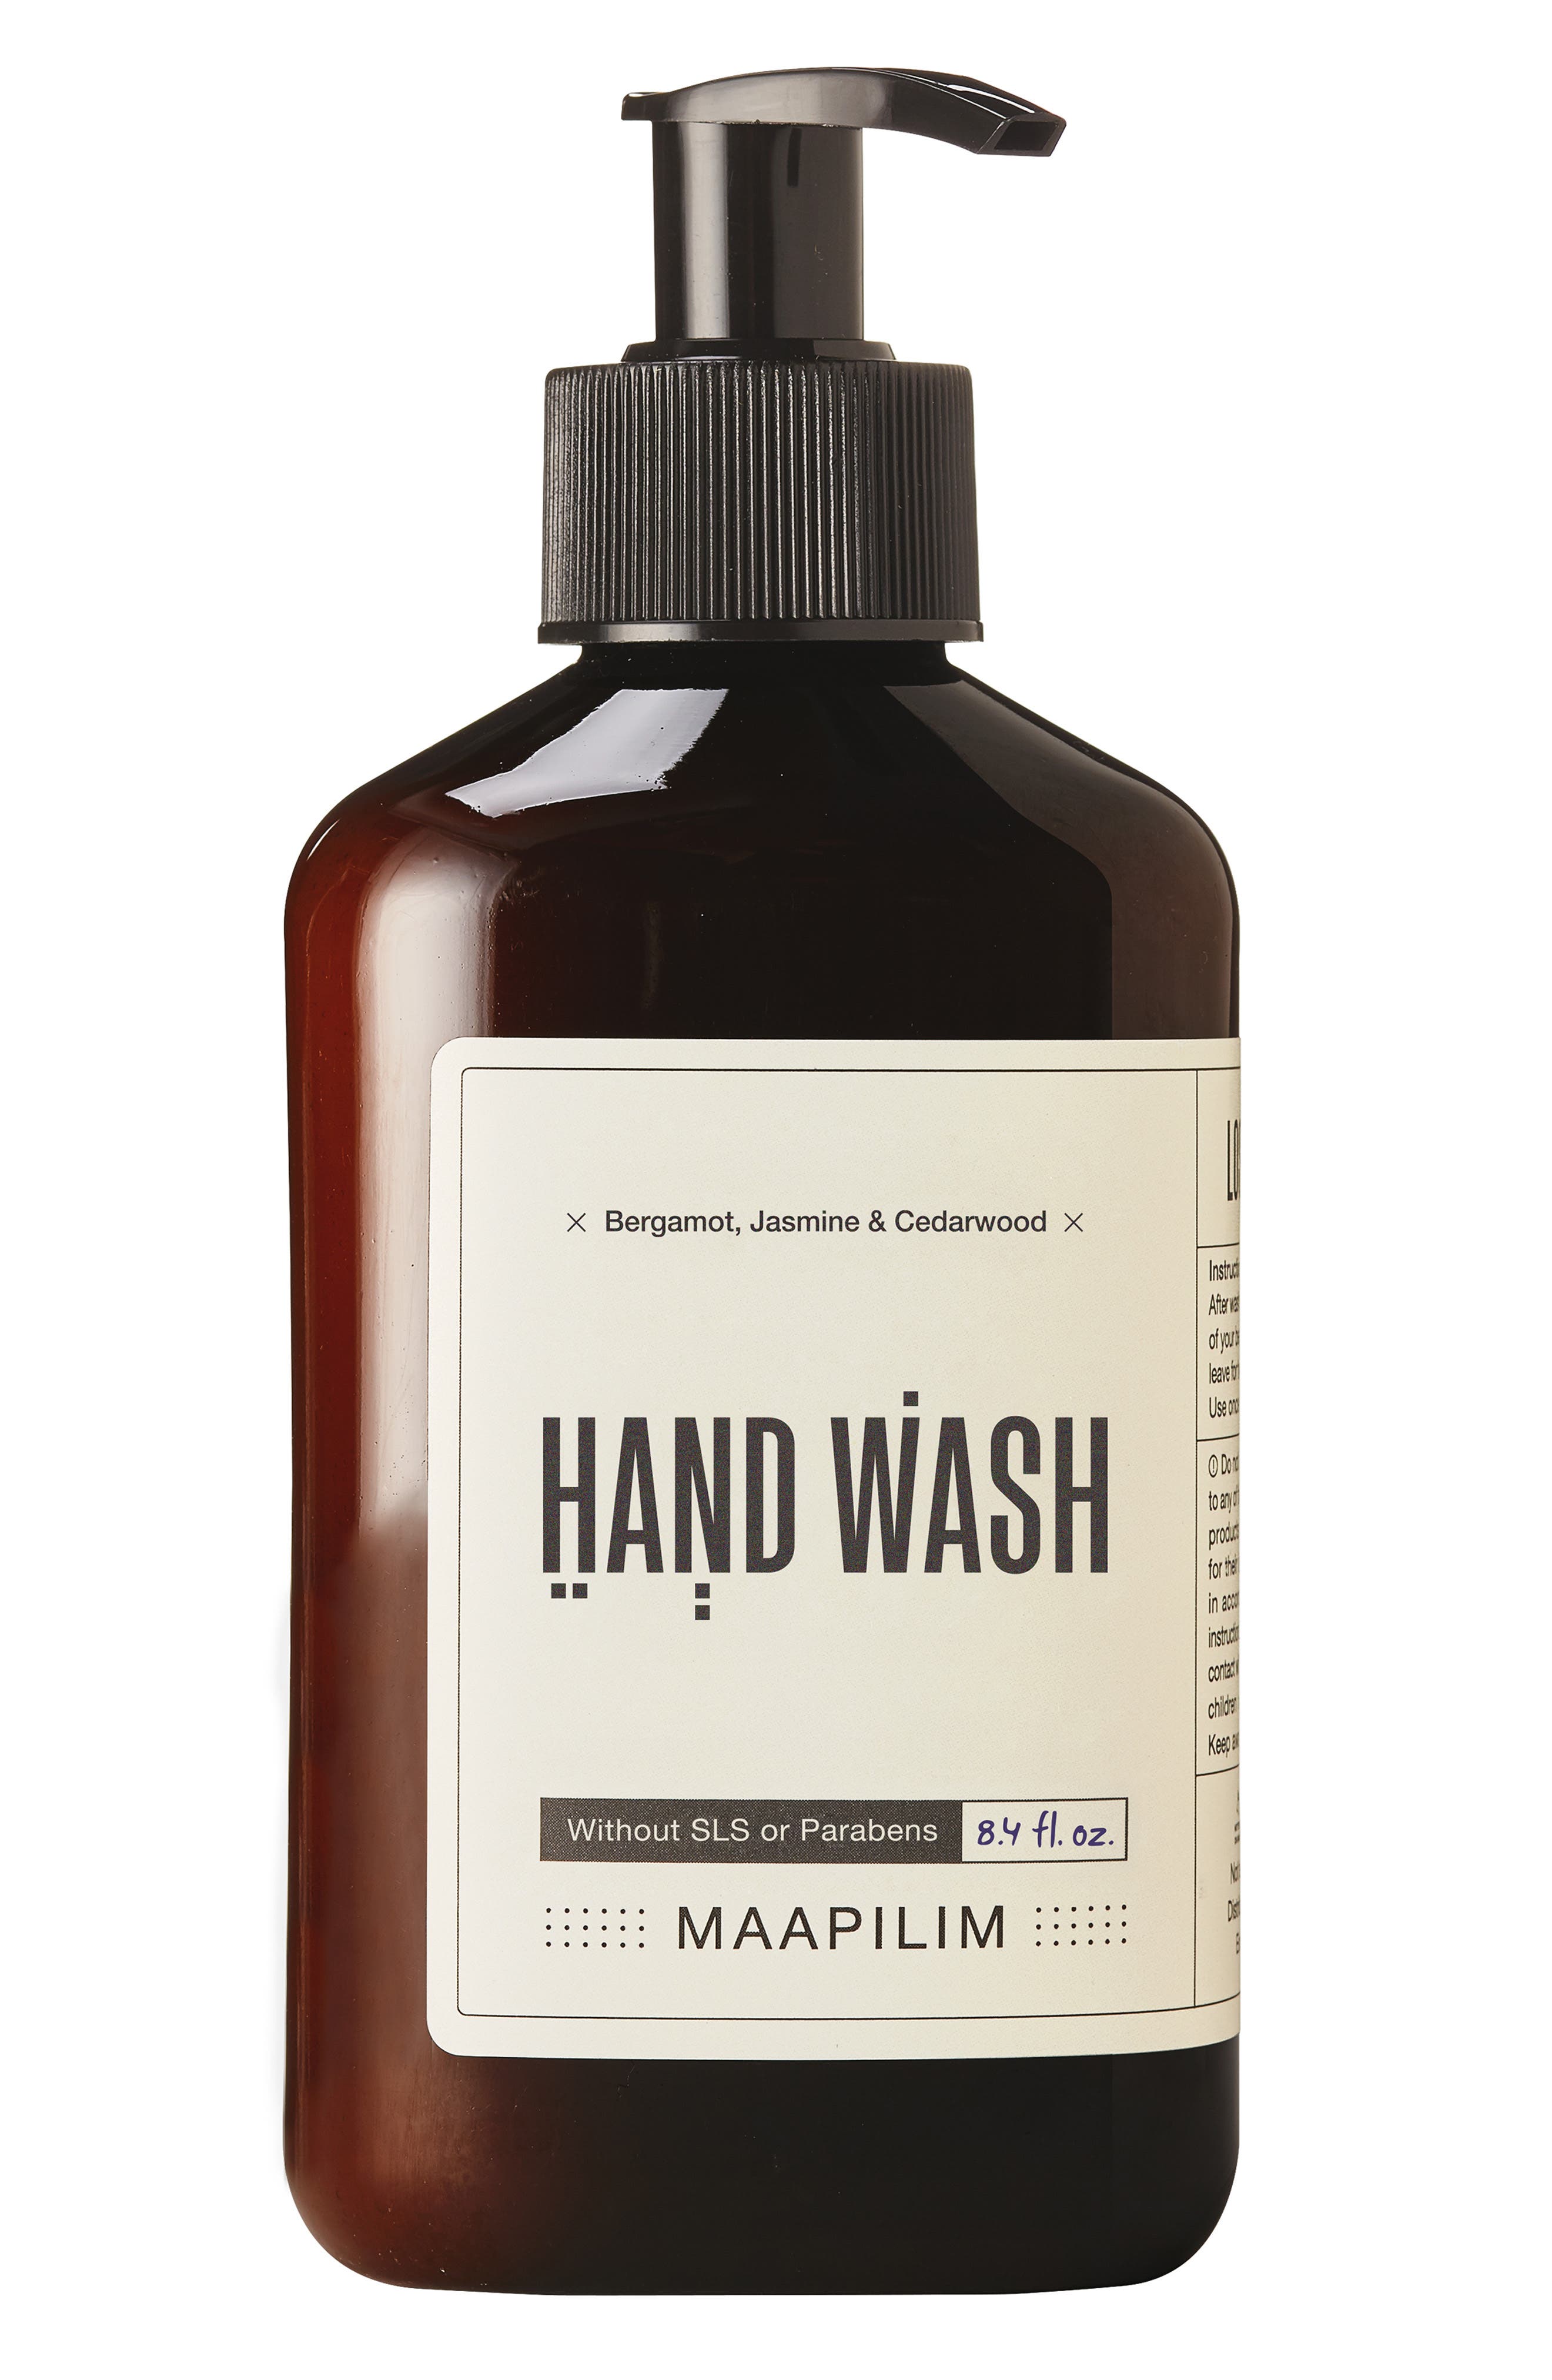 MAAPILIM Hand Wash at Nordstrom